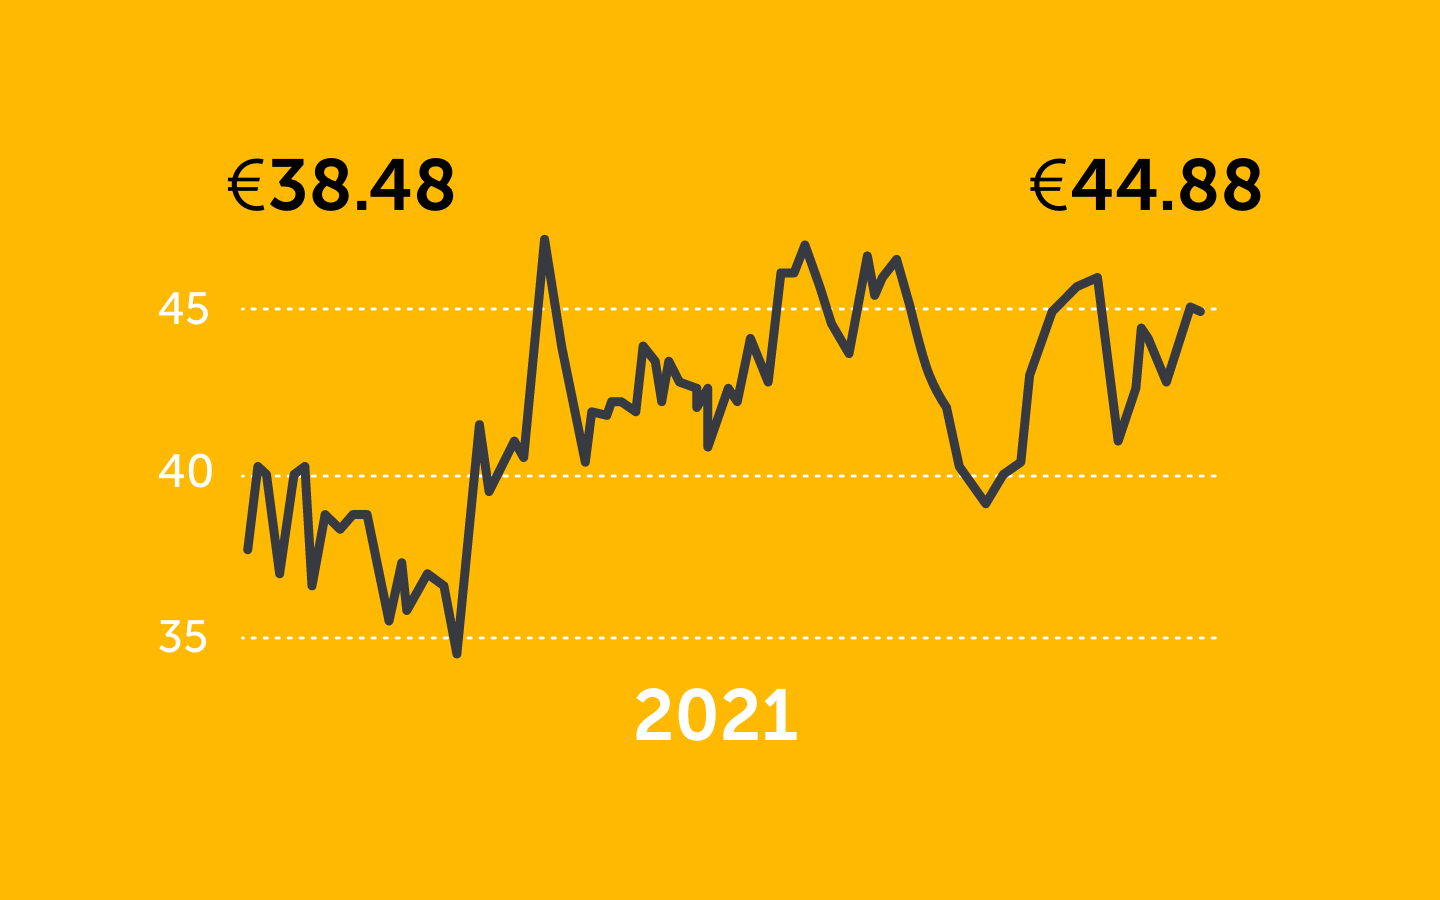 Jungheinrich share price performance 2021